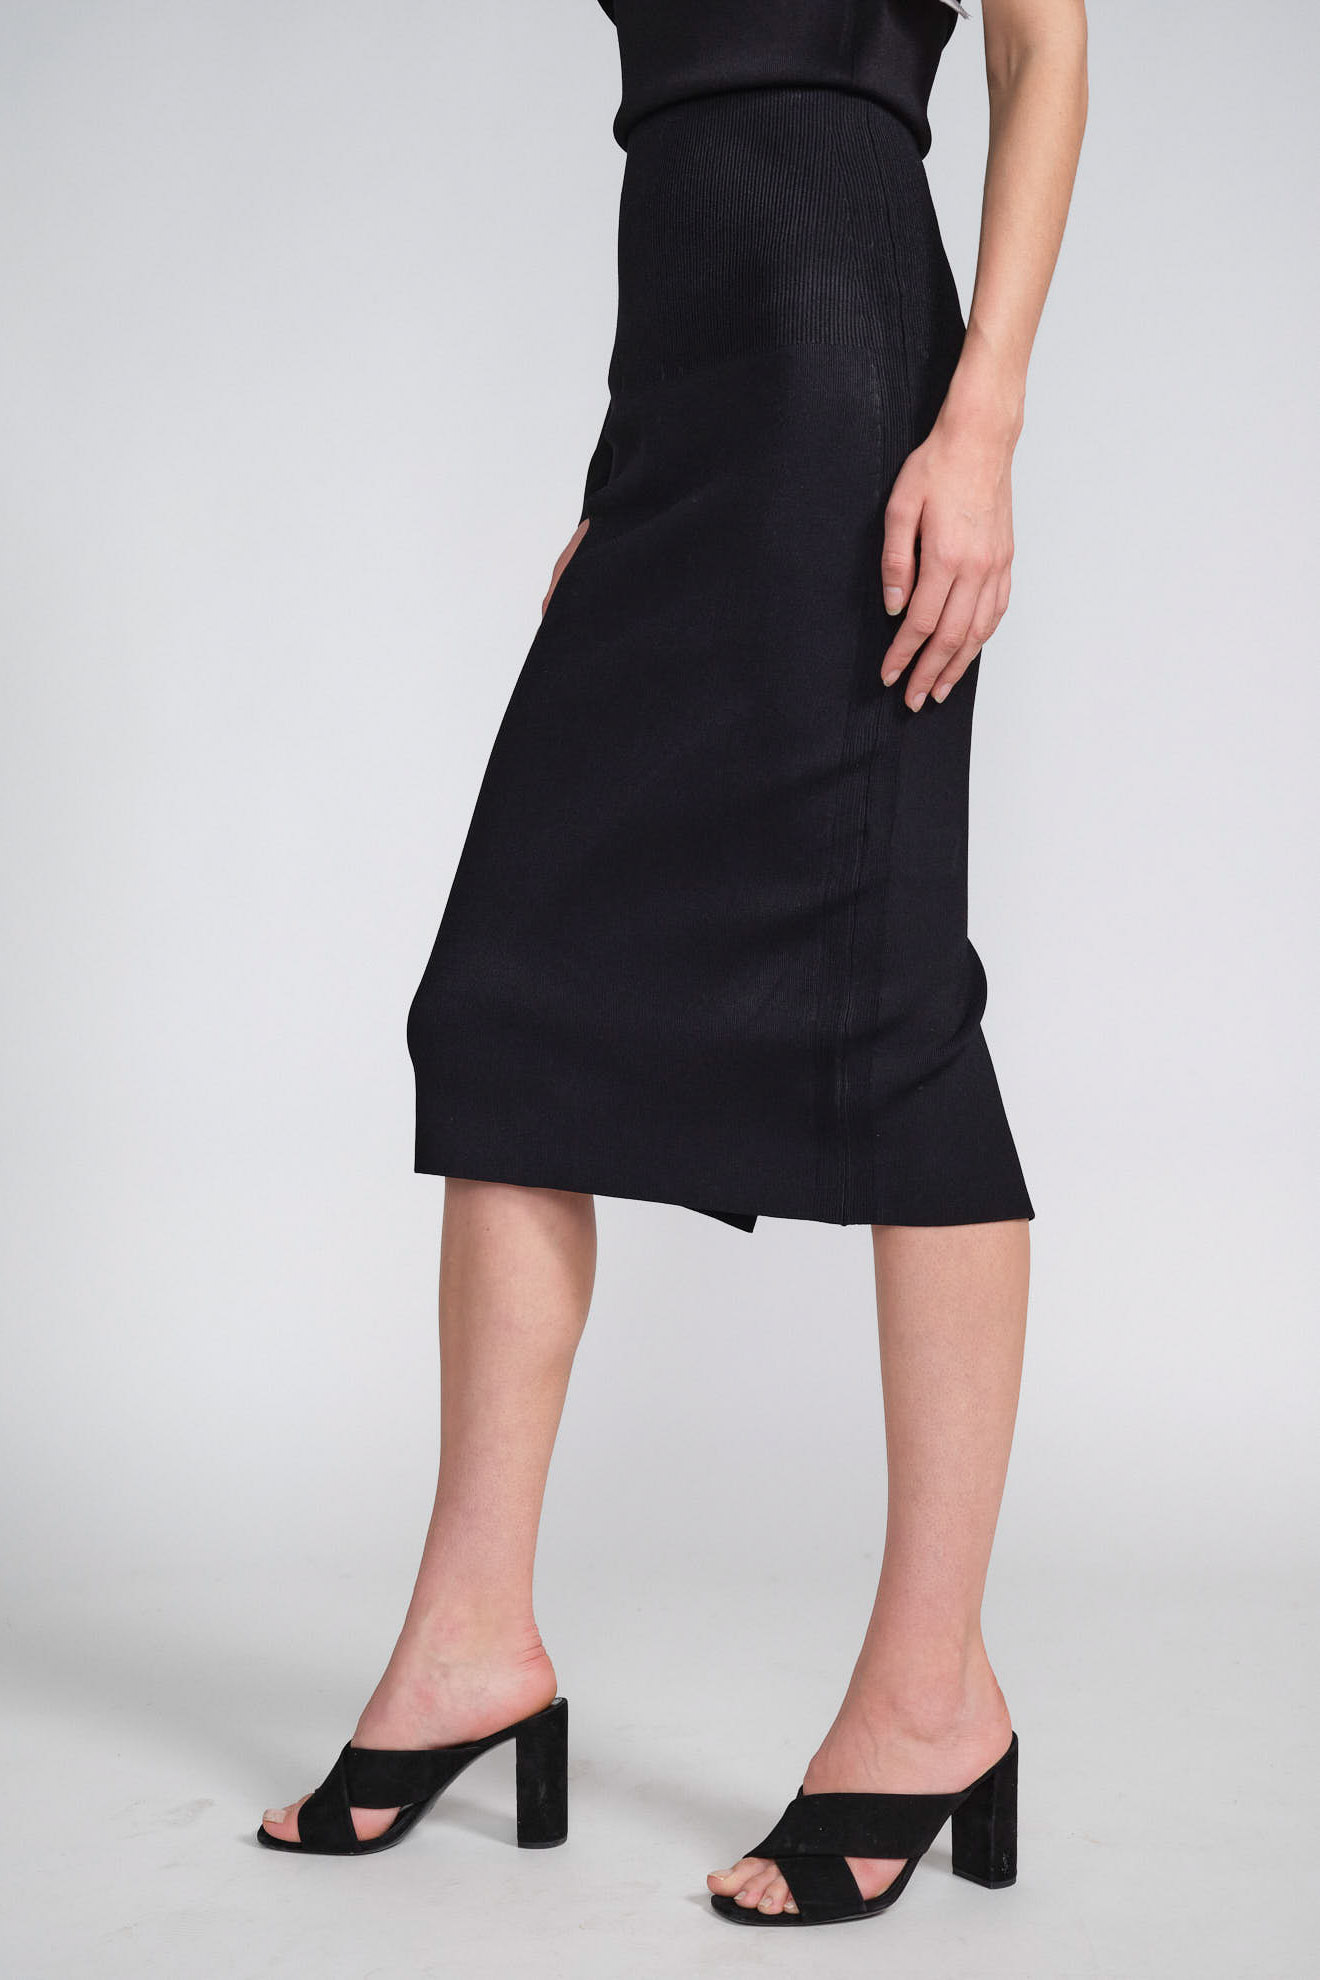 victoria beckham skirt black plain mix model side